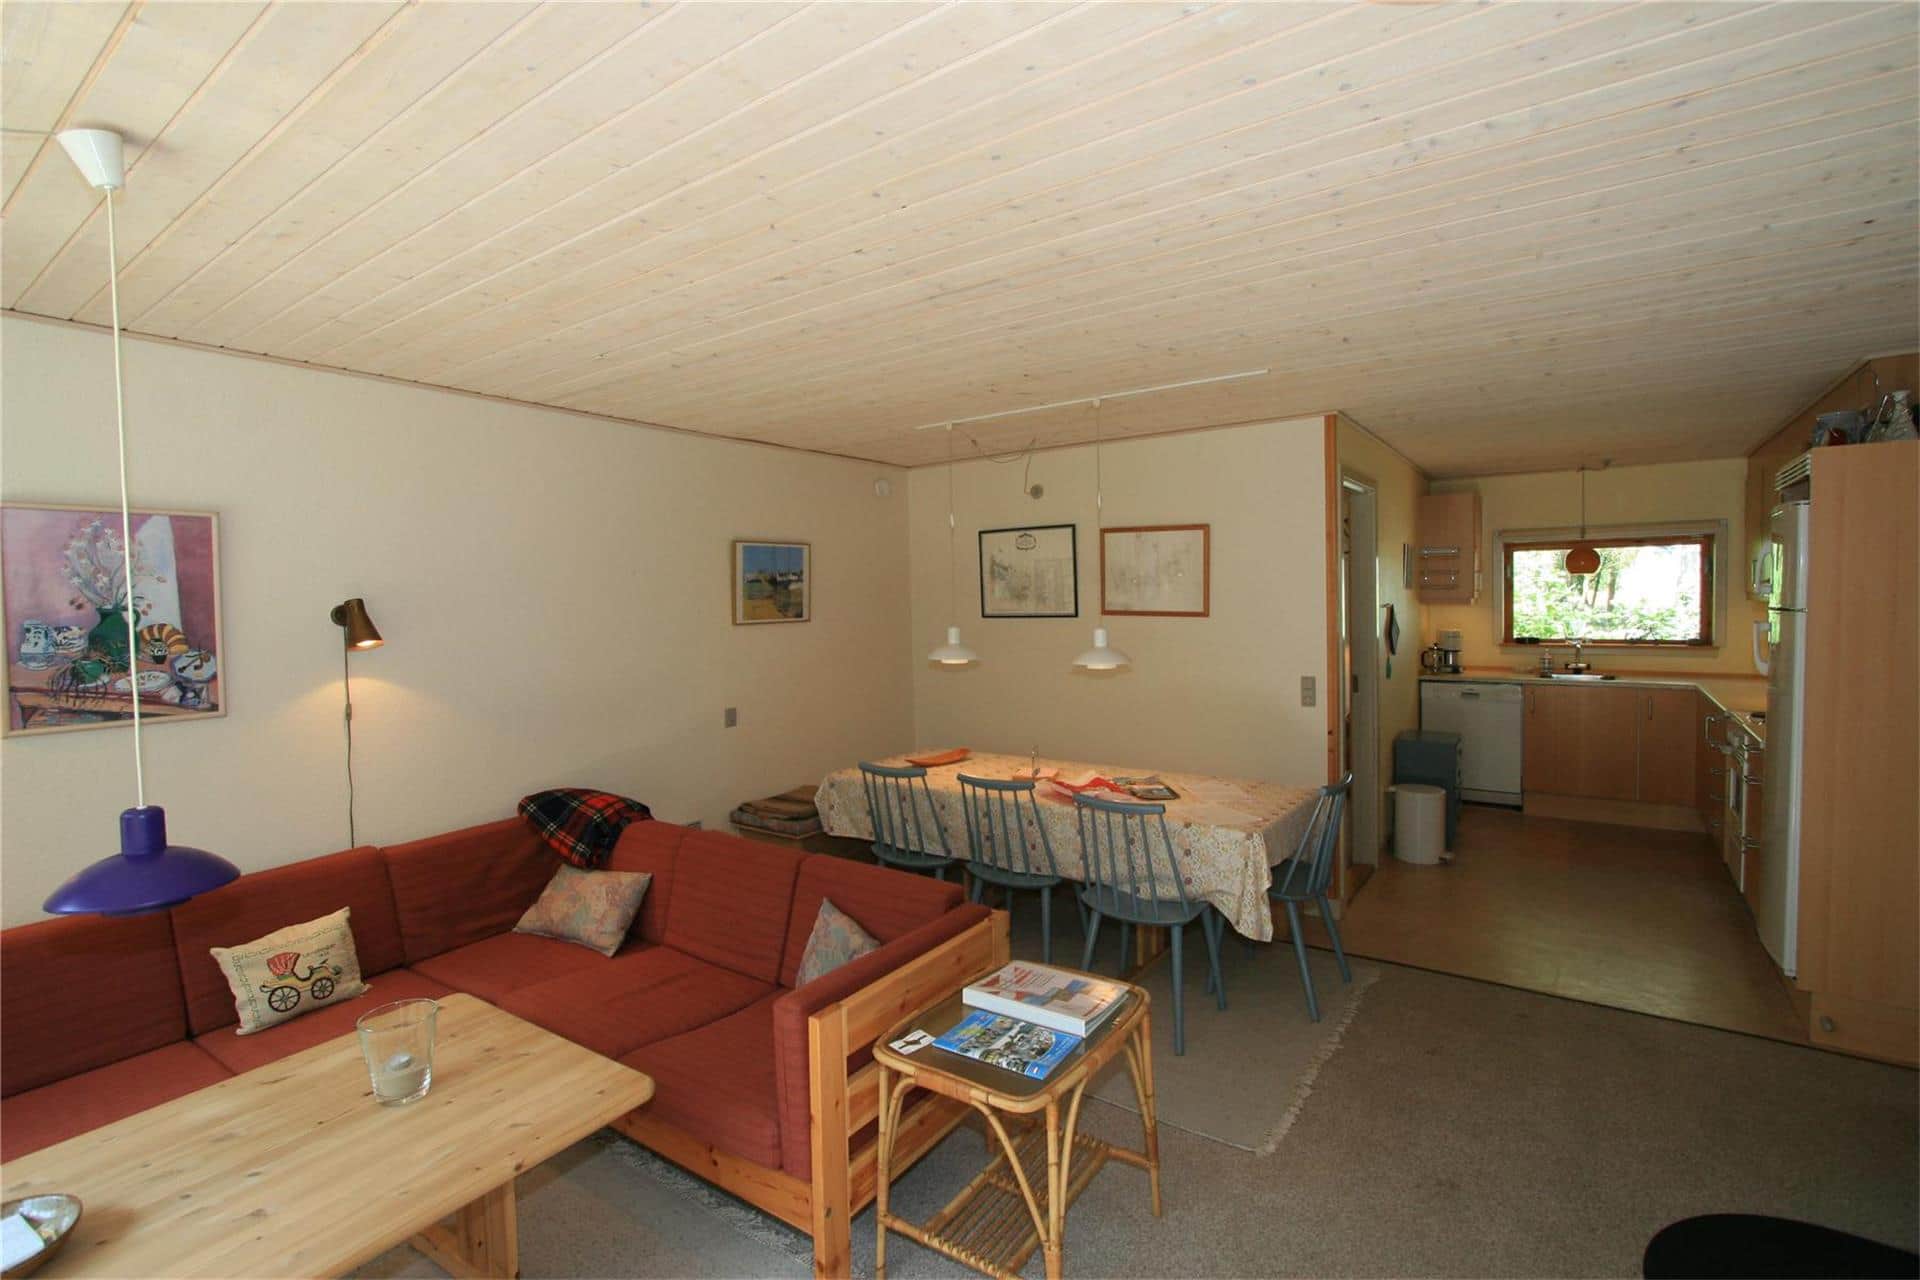 Livingroom 1 Image 3-10 Holiday-home 4716, Boderne 95, DK - 3720 Aakirkeby